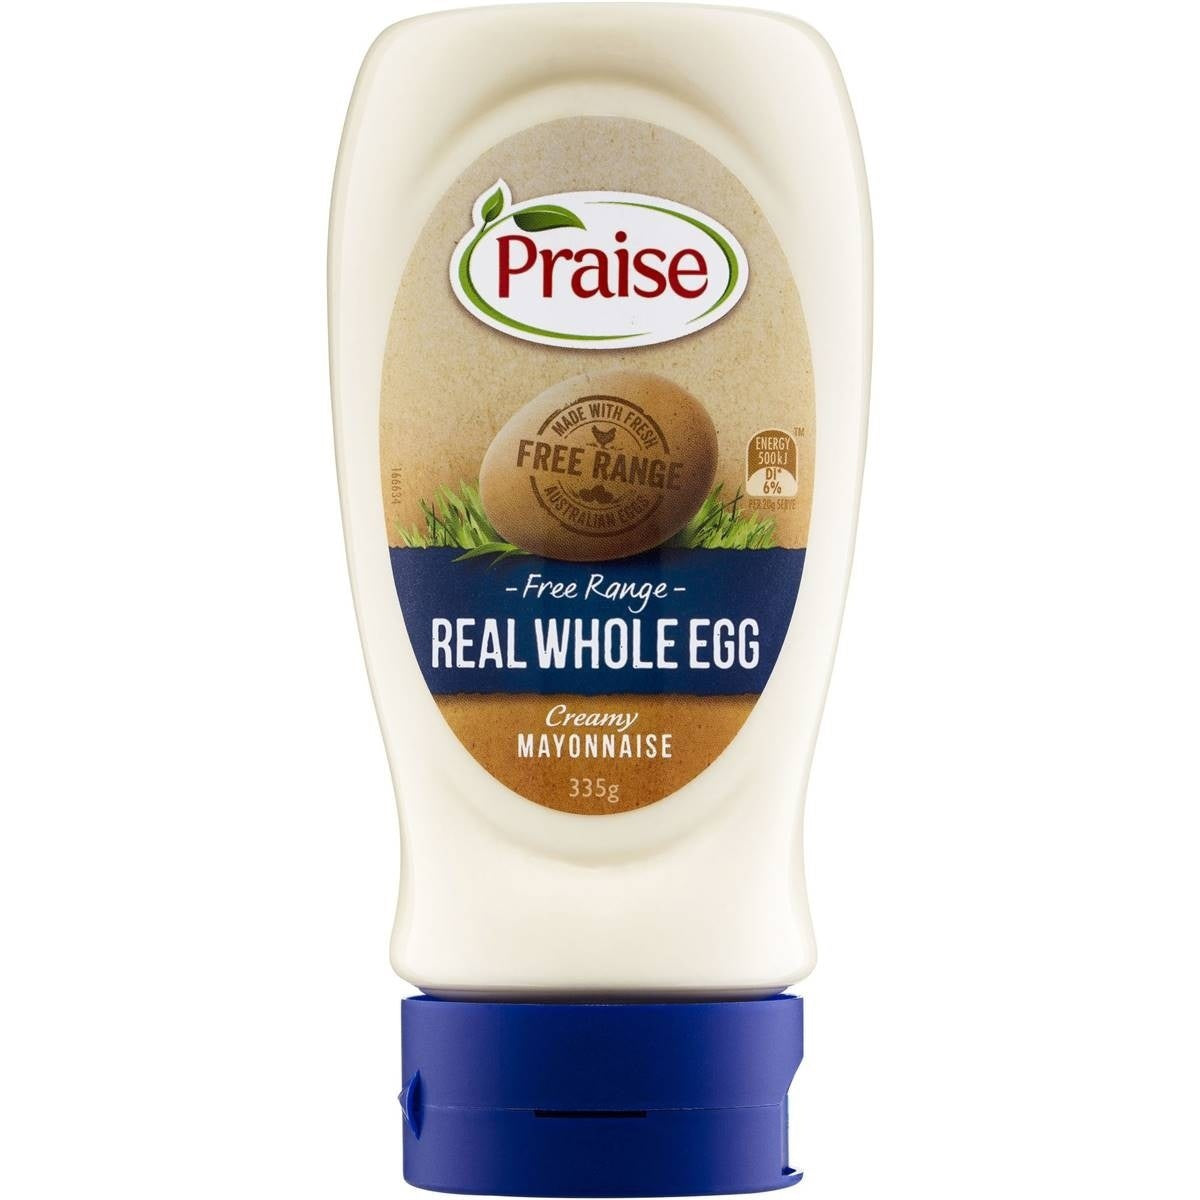 Praise Real Whole Egg Creamy Mayonnaise 335g